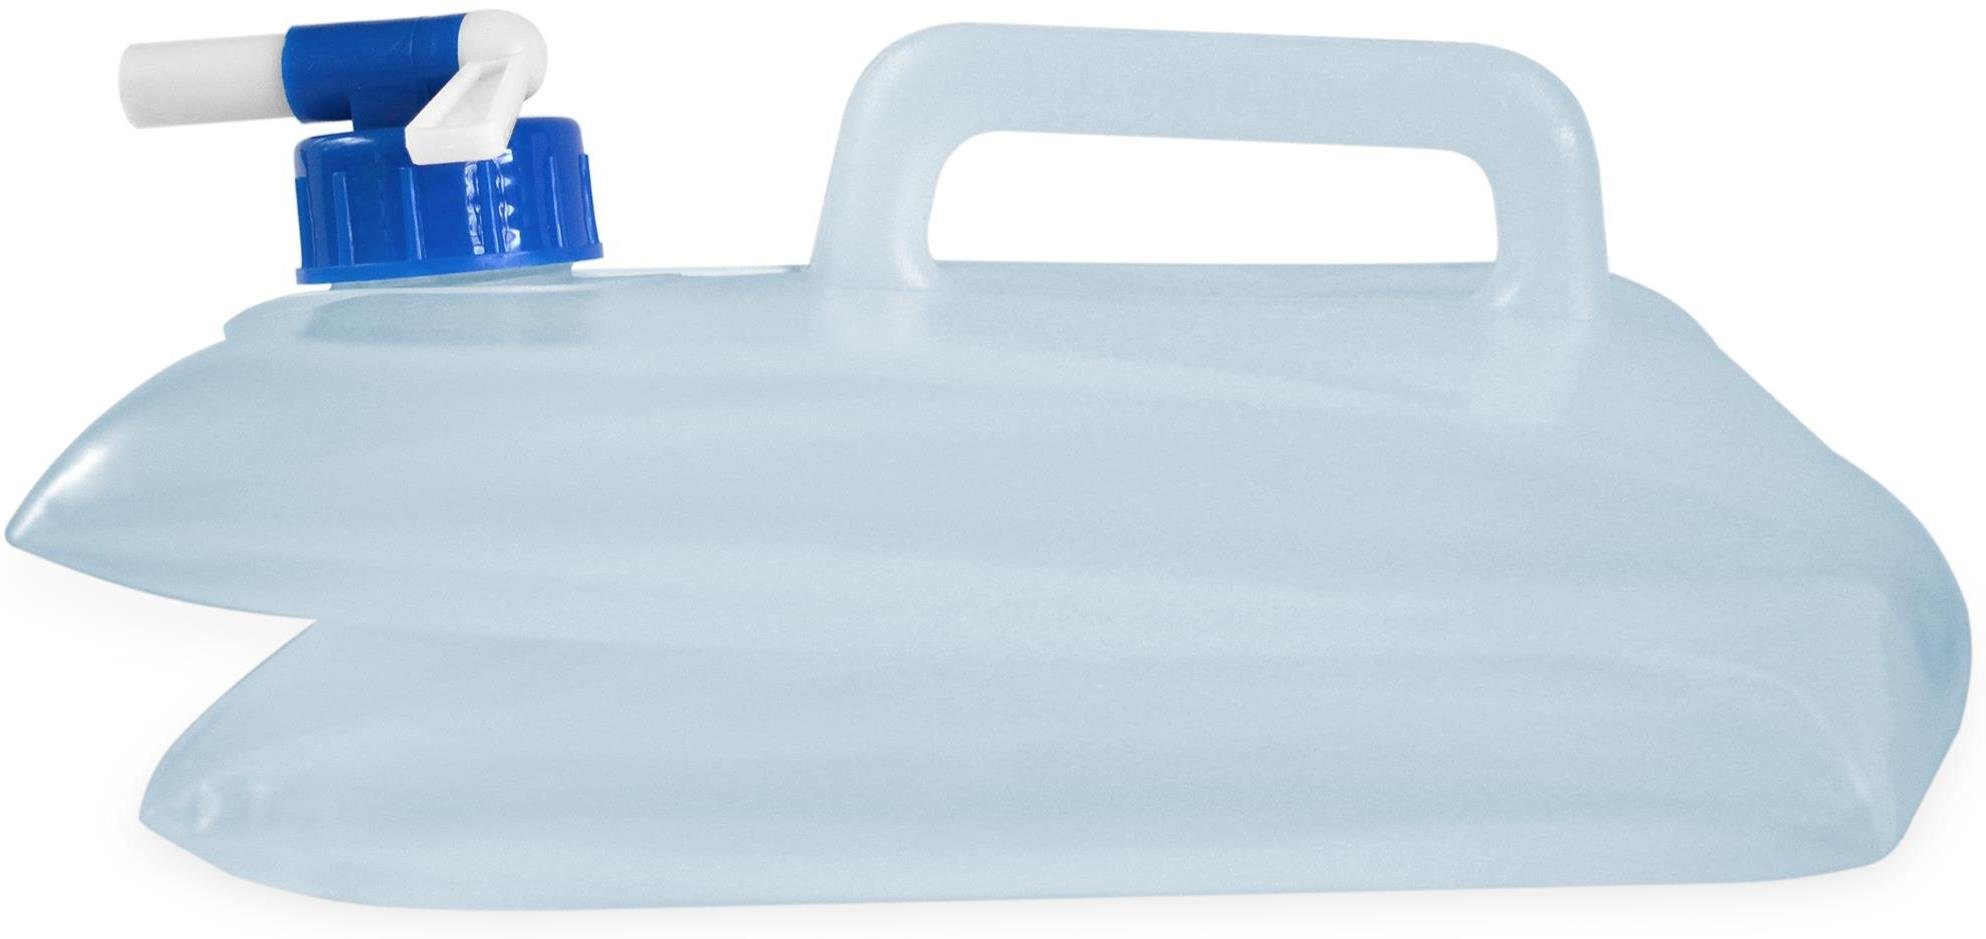 normani Kanister »Faltkanister 5 Liter Shuican« (1 Stück), Faltbarer  Falteimer Wasserkanister mit Hahn Wasserbehälter Trinkwasserkanister -  Lebensmittelecht online kaufen | OTTO